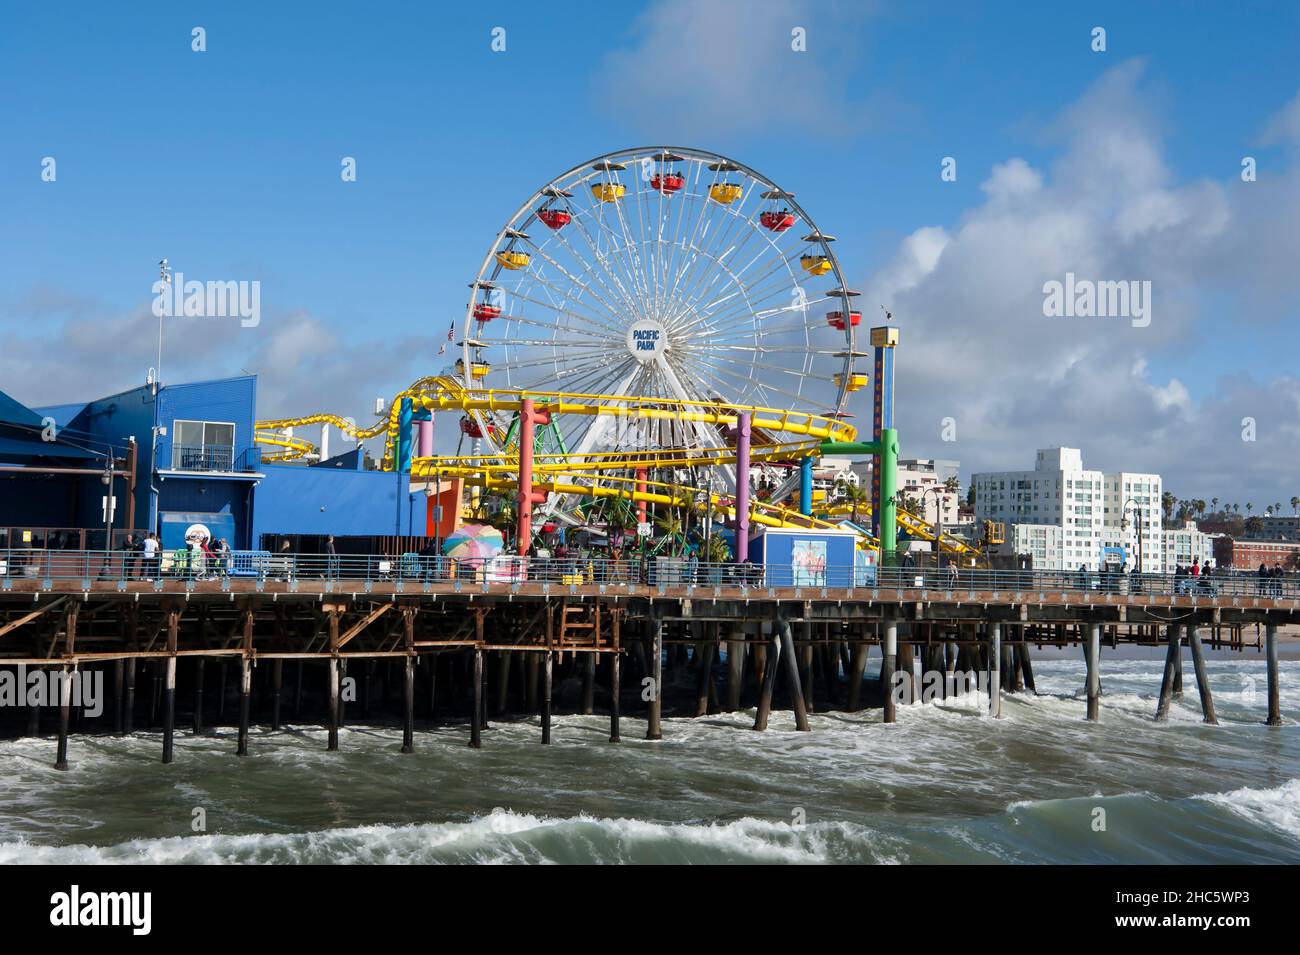 Amusement rides and Ferris Wheel at the Santa Monica Pier, Los Angeles, CA Stock Photo